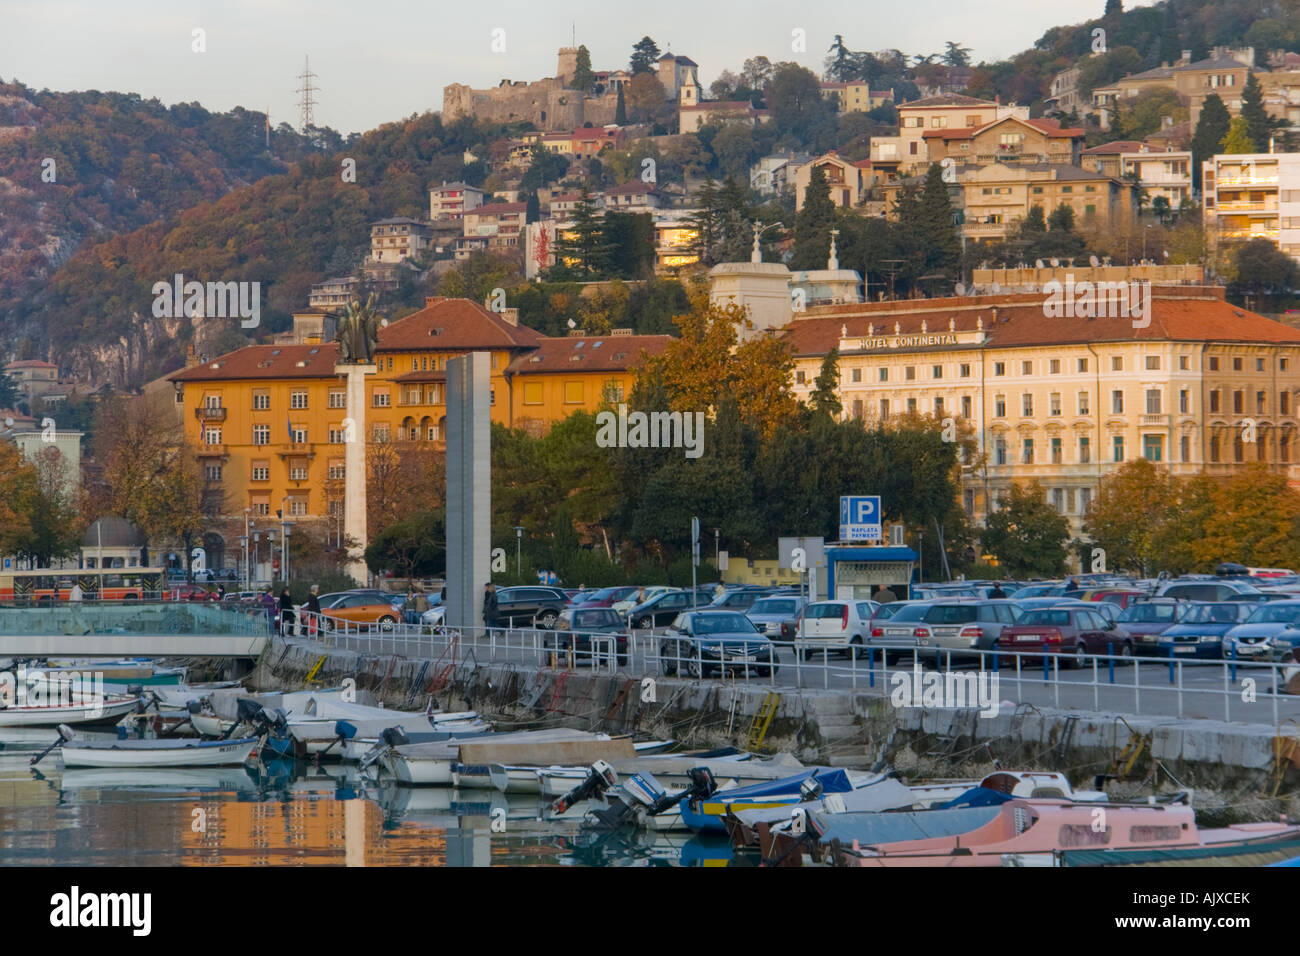 Rijeka in Croatia, 'Mrtvi kanal' and Trsat castle on hill in background Stock Photo